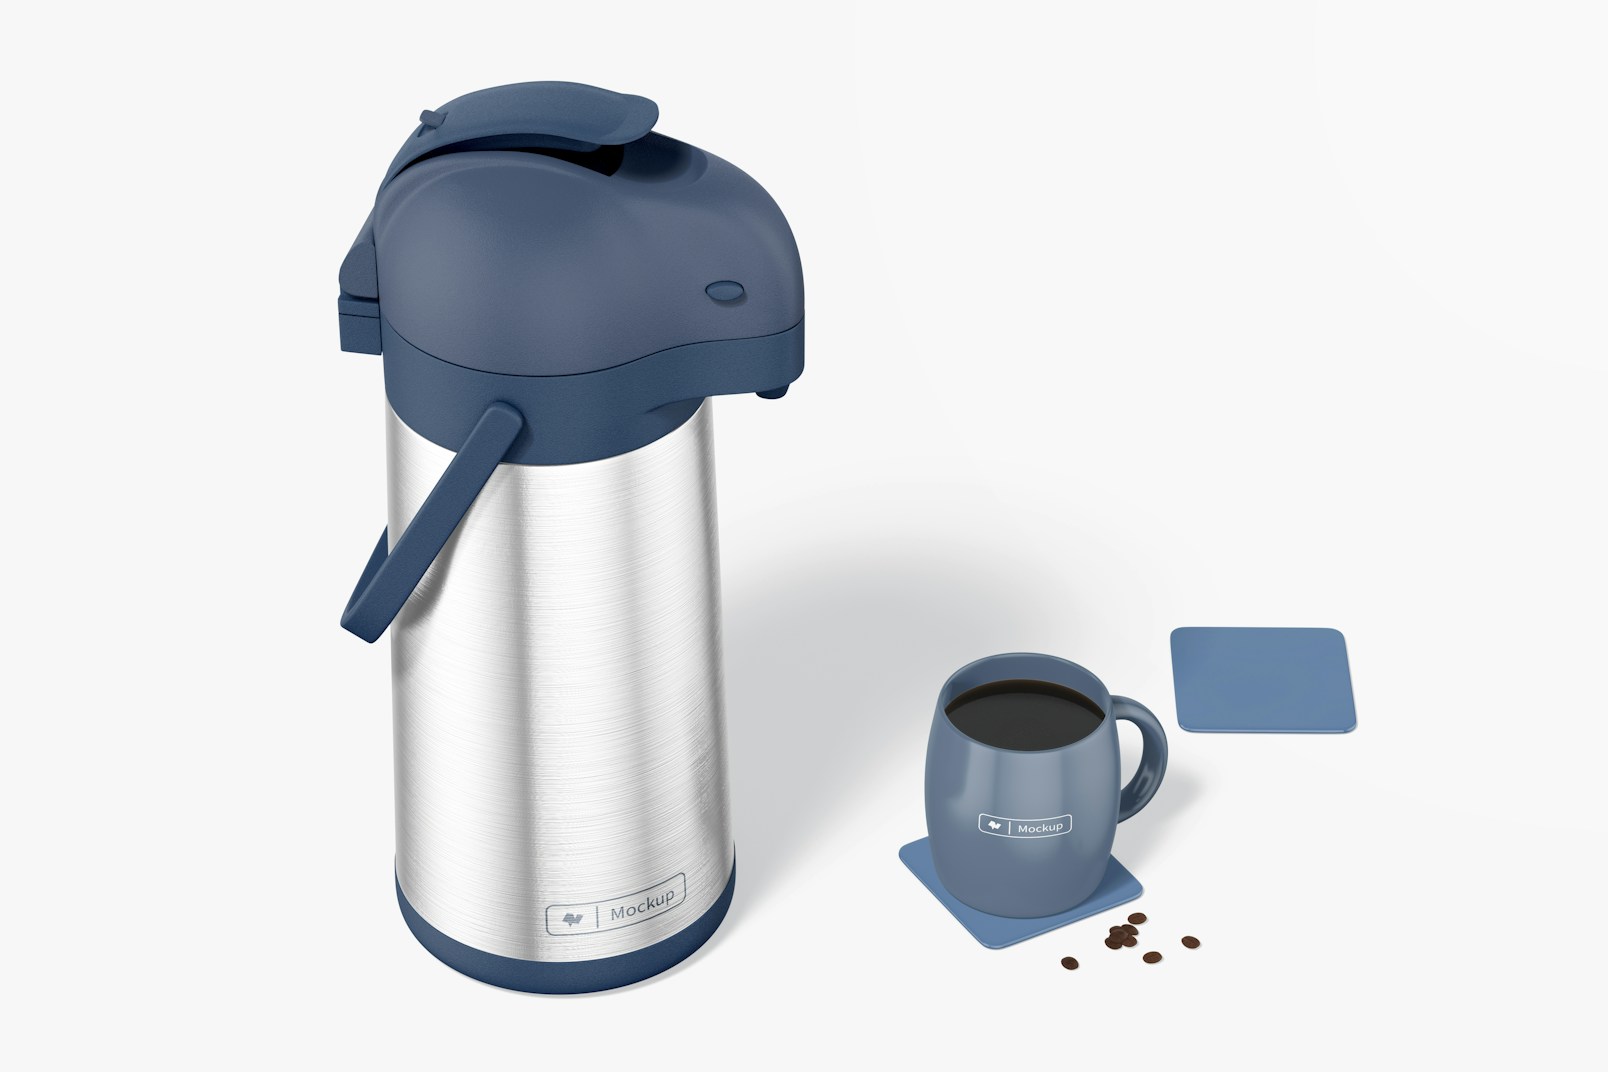 Thermal Coffee Dispenser with a Mug Mockup